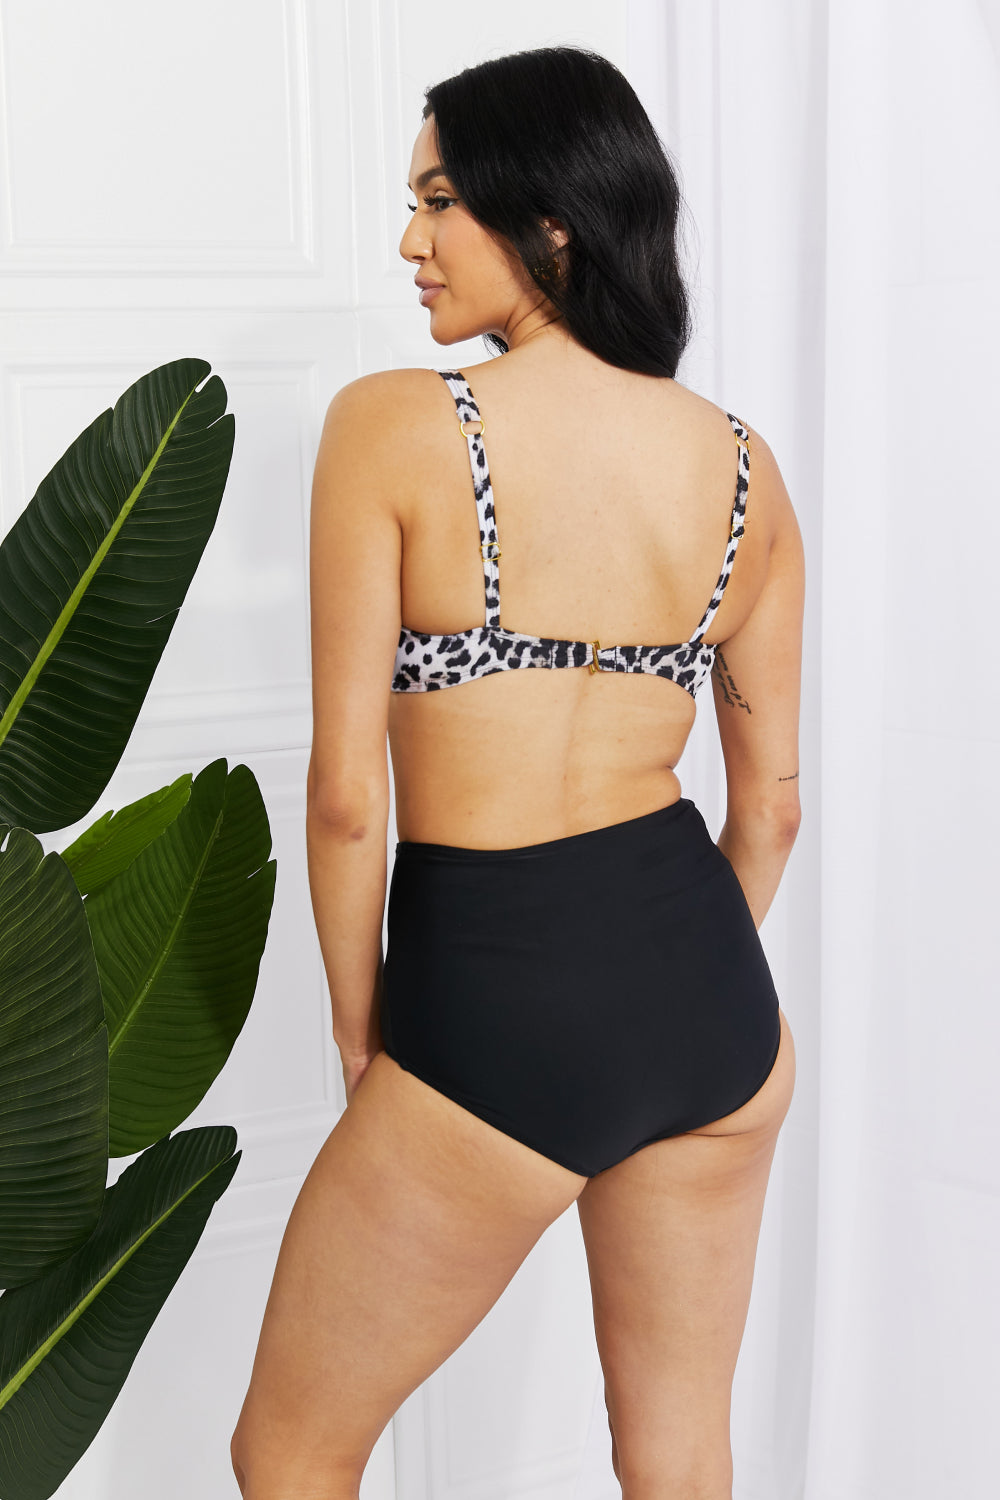 Marina West Swim Take A Dip Twist High-Rise Bikini in Leopard - Bikinis & Tankinis - FITGGINS